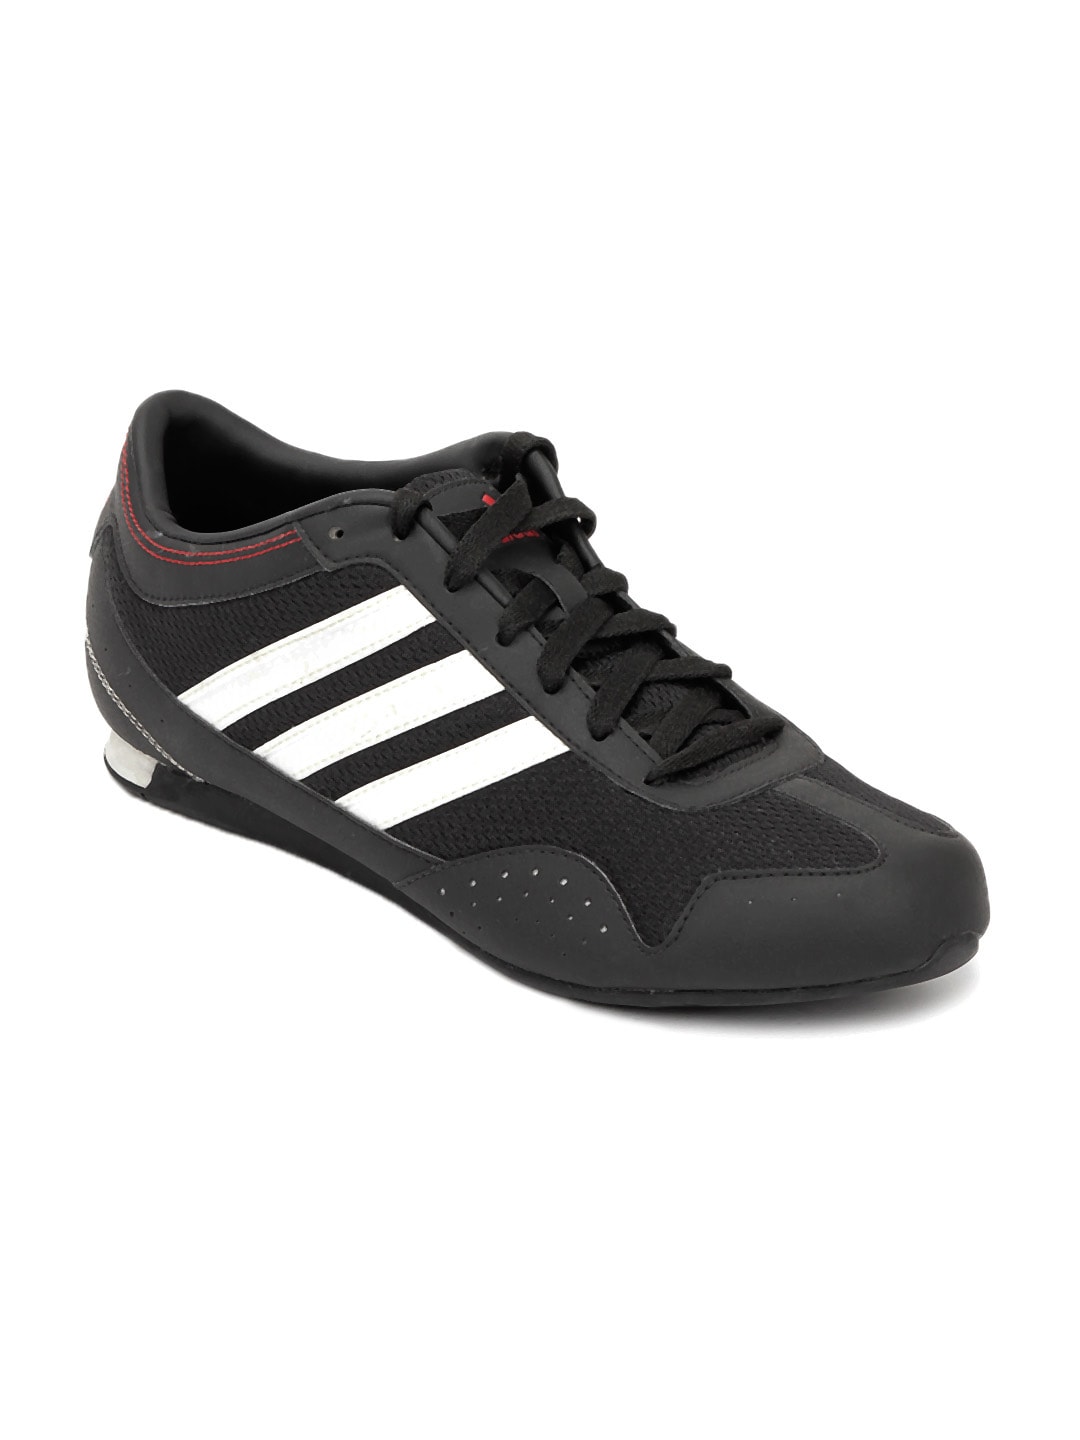 ADIDAS Men Black Apelido Sports Shoes